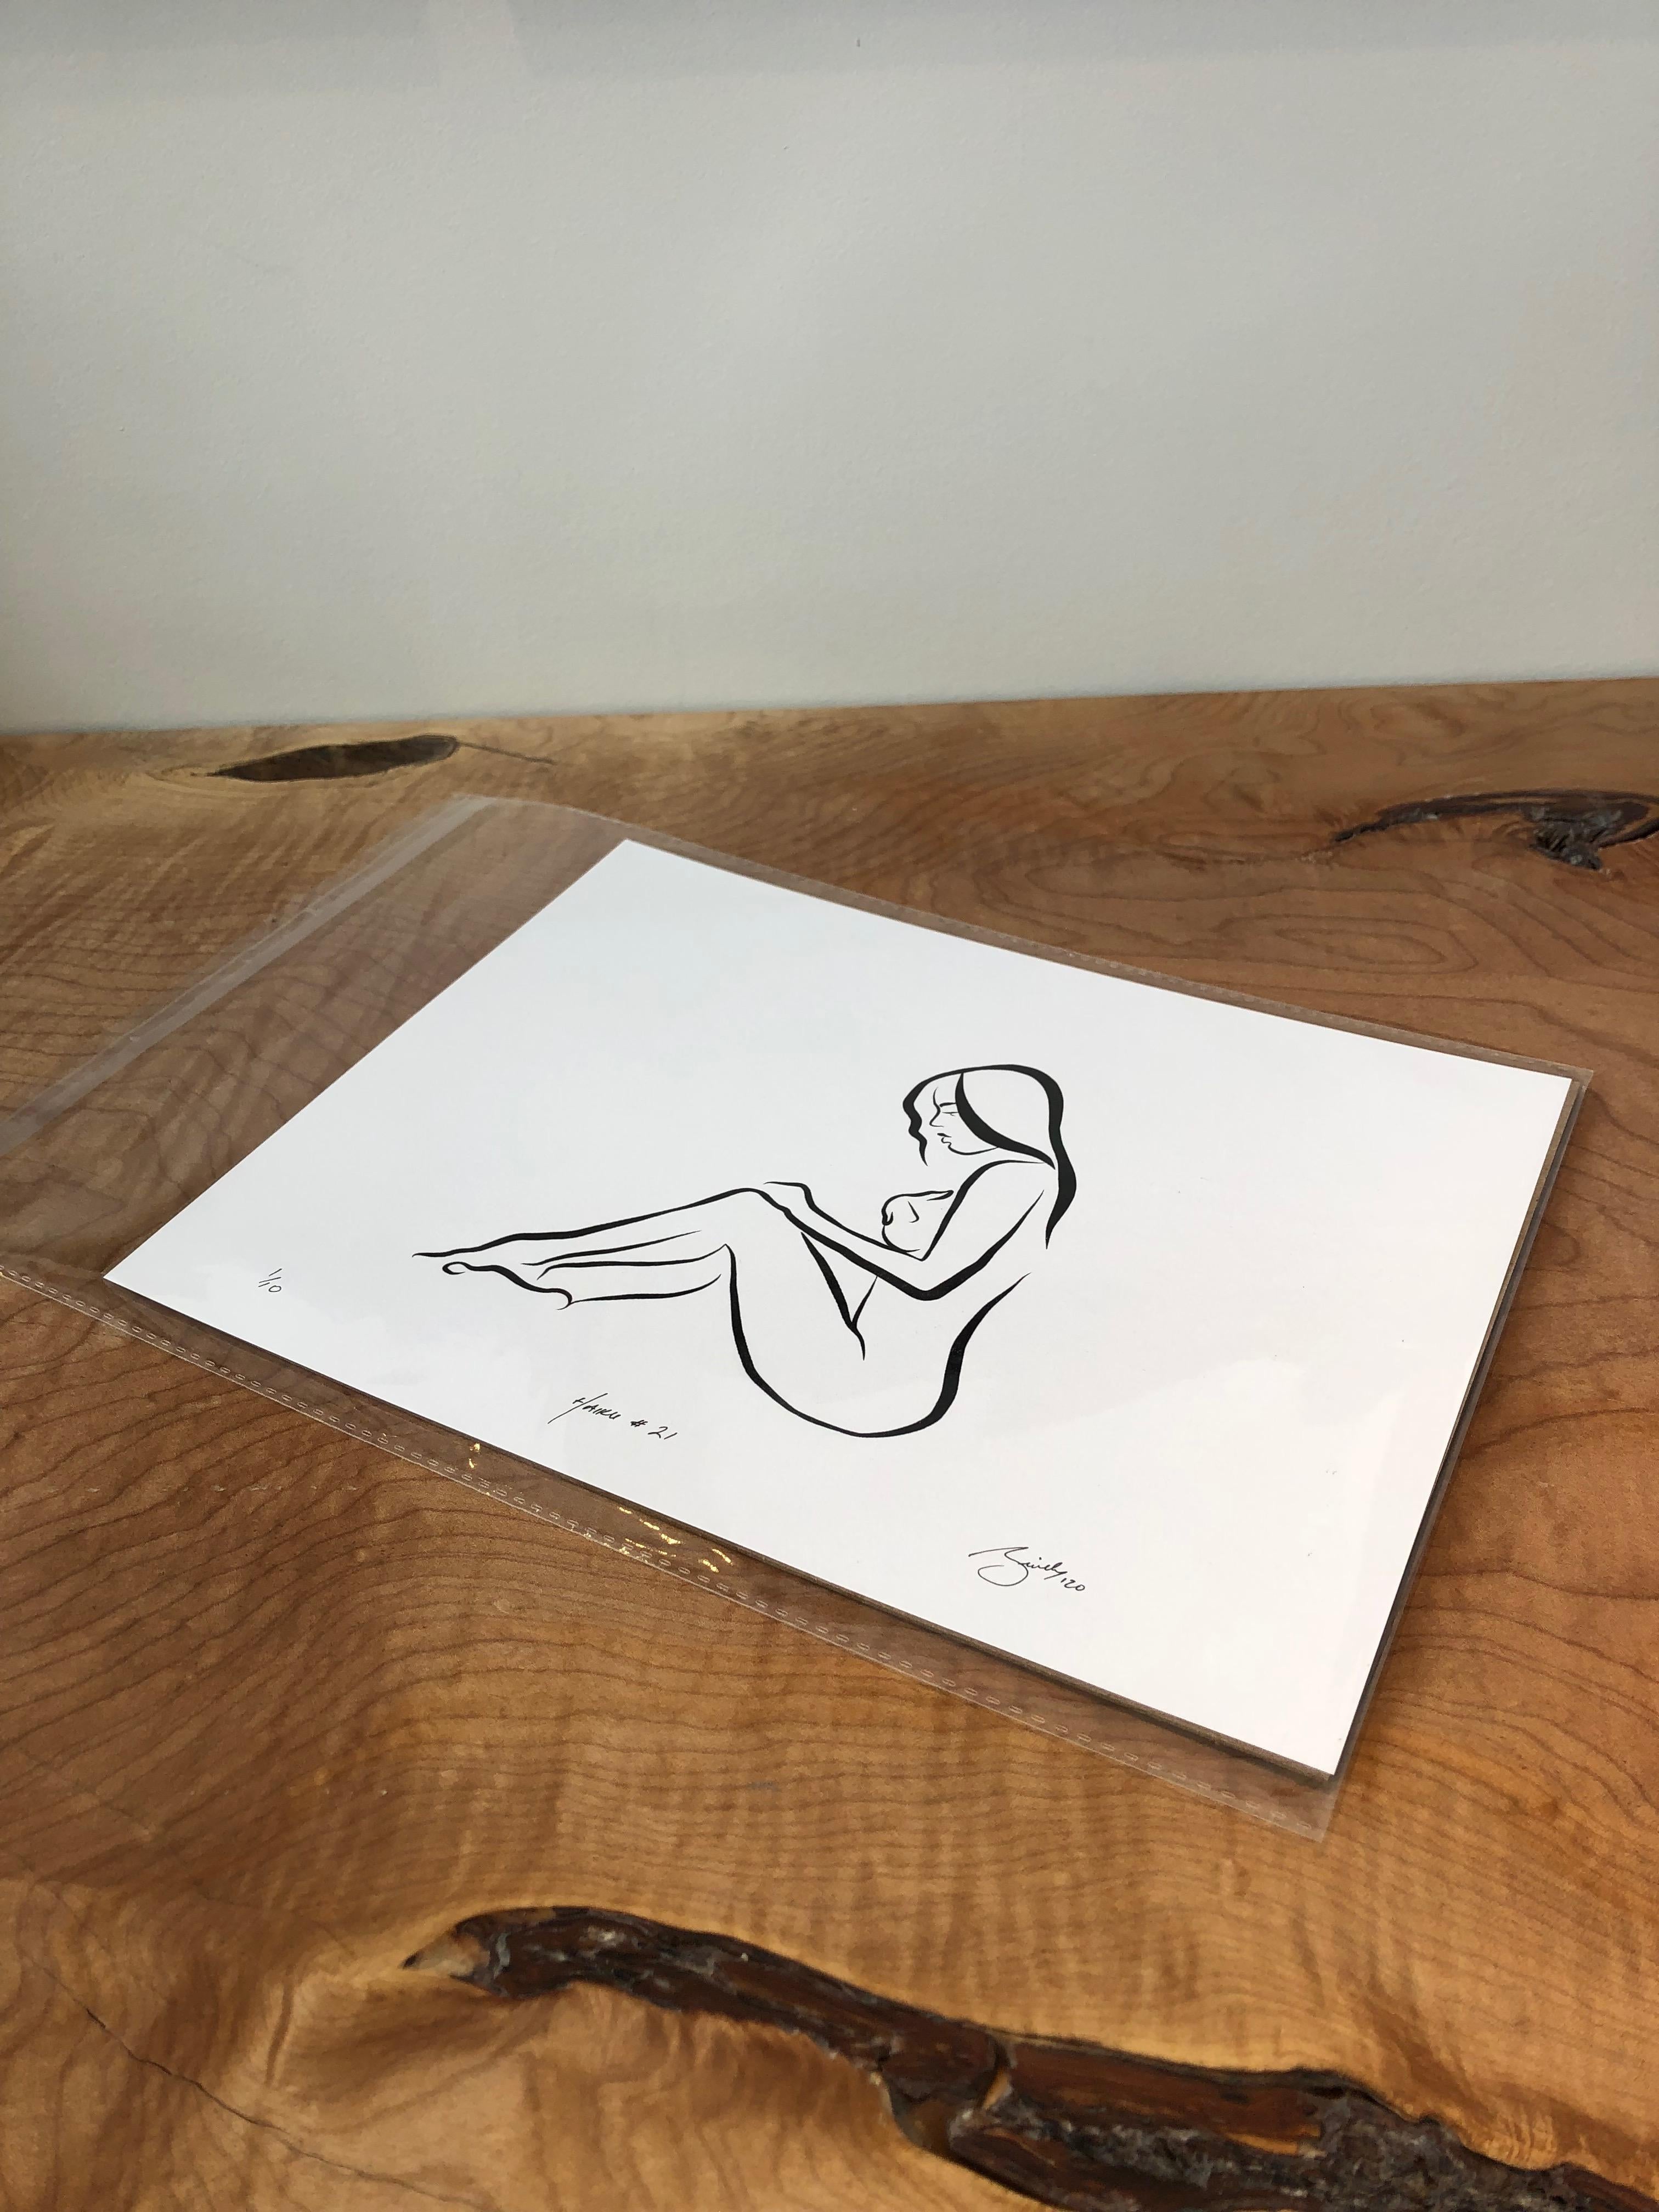 Haiku #21 - Digital Vector Drawing Seated Female Nude Woman Figure Cover Breast - Contemporary Art by Michael Binkley